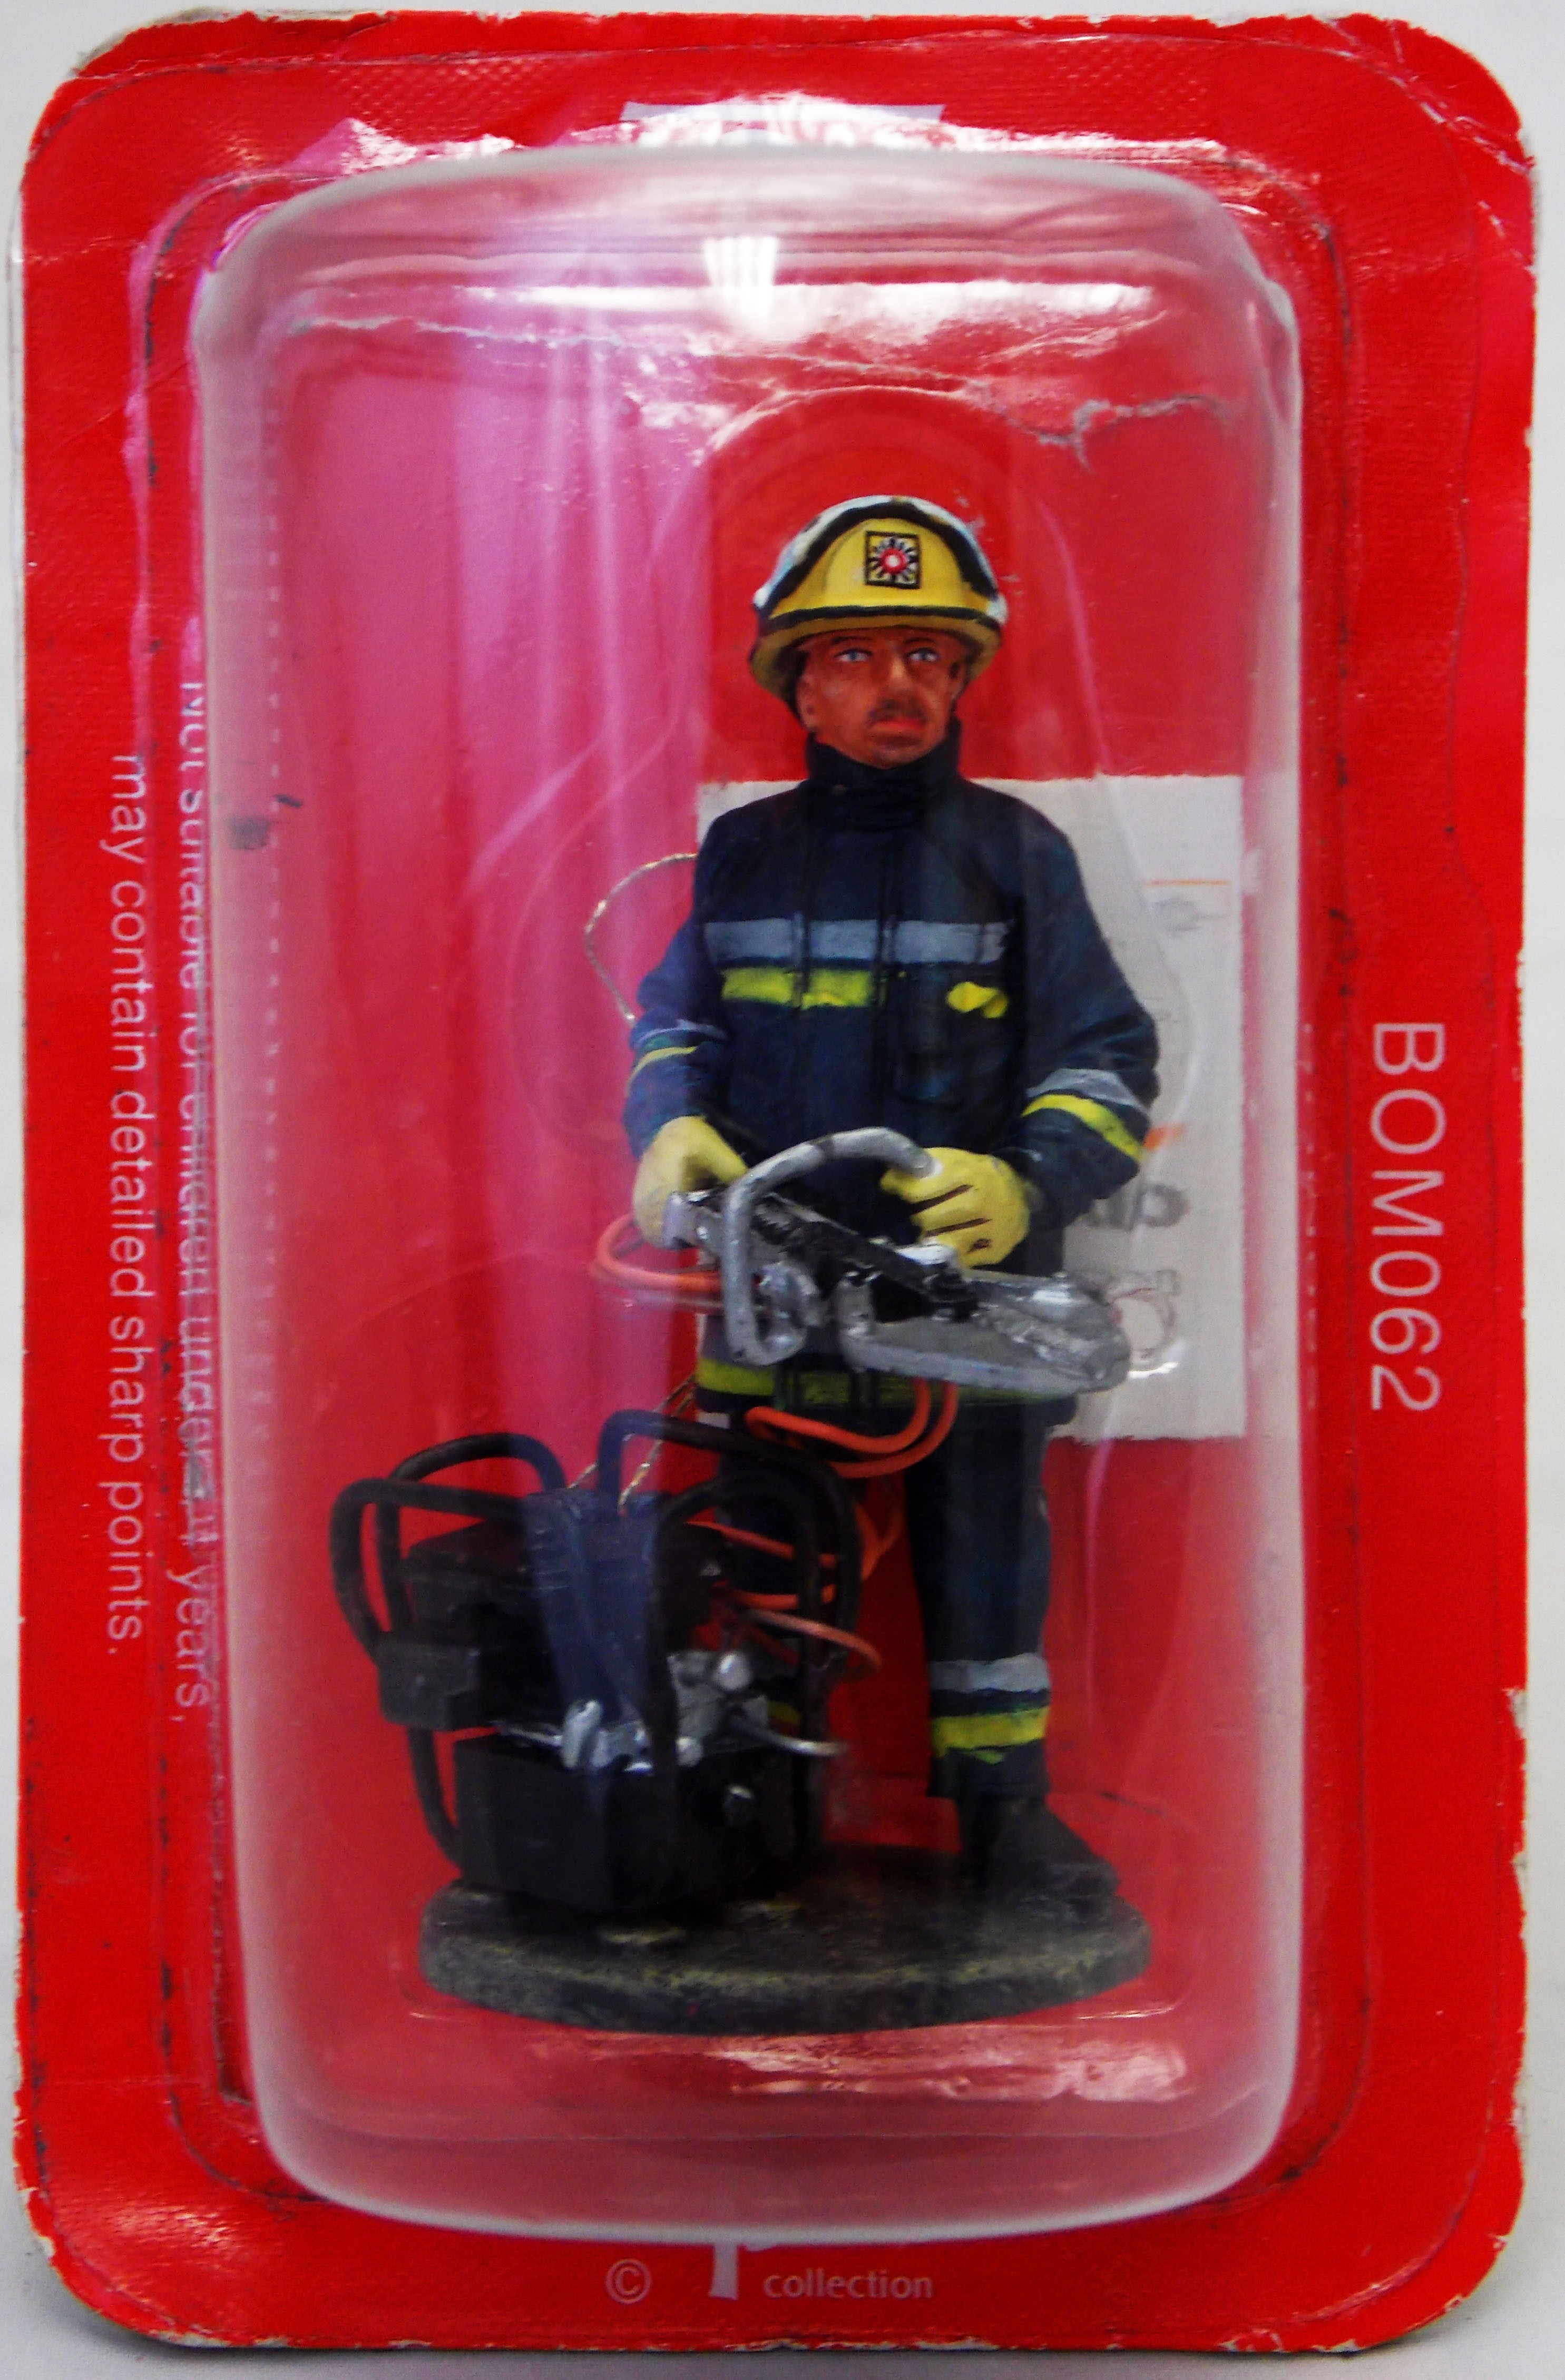 Firefighter Figurine Fireman Brussels Belgium 2003 Metal Del Prado 1/32 2.75" 